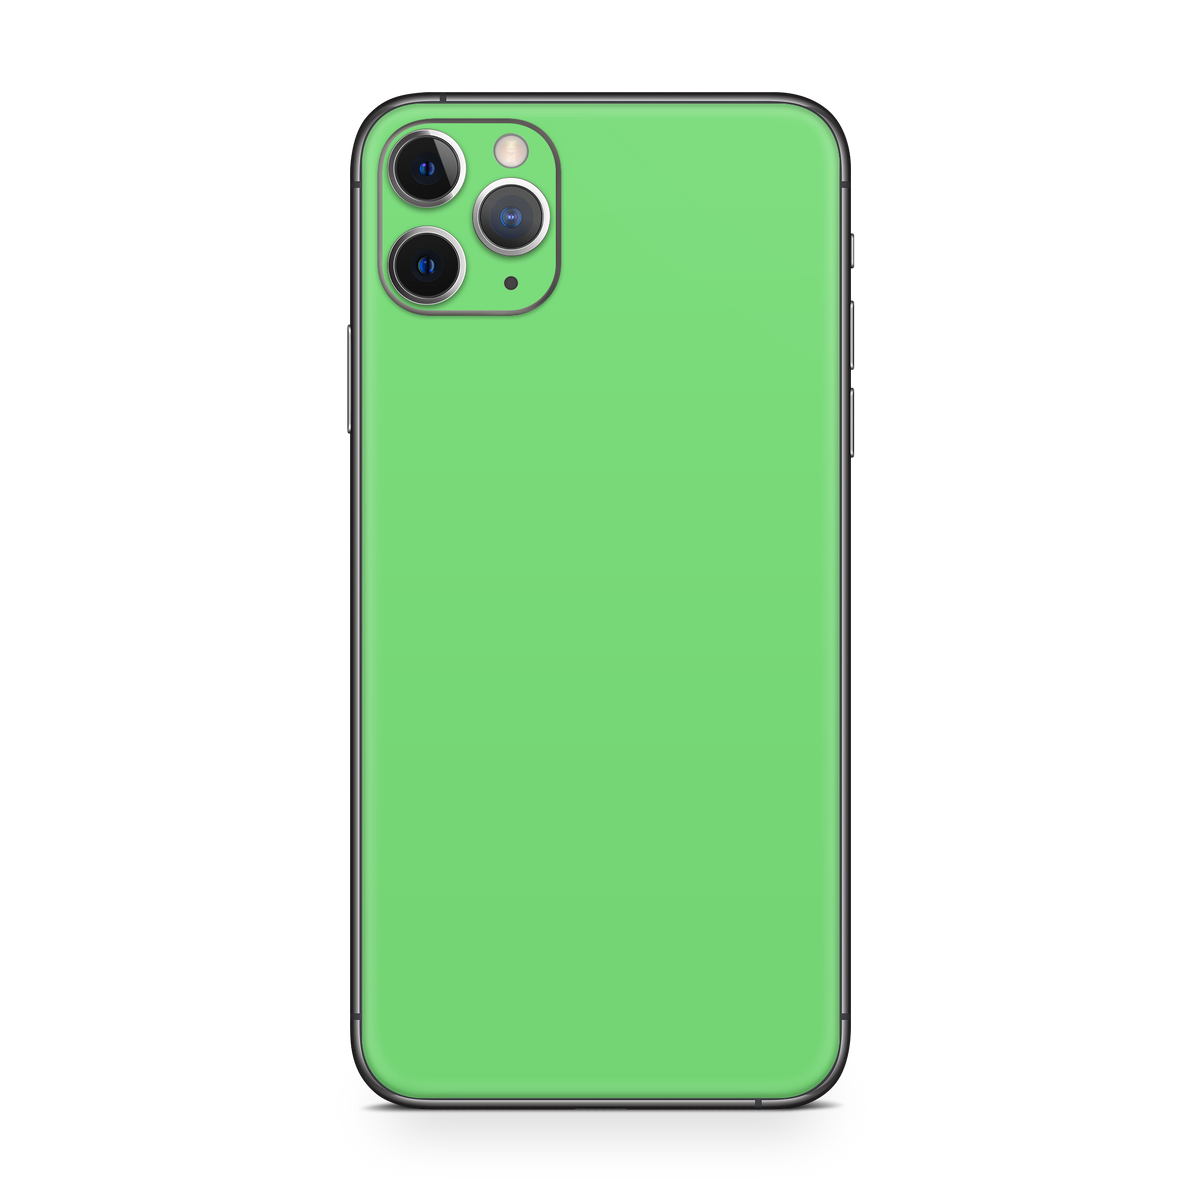 Apple iPhone 11 Pro max Pastel Green Skin